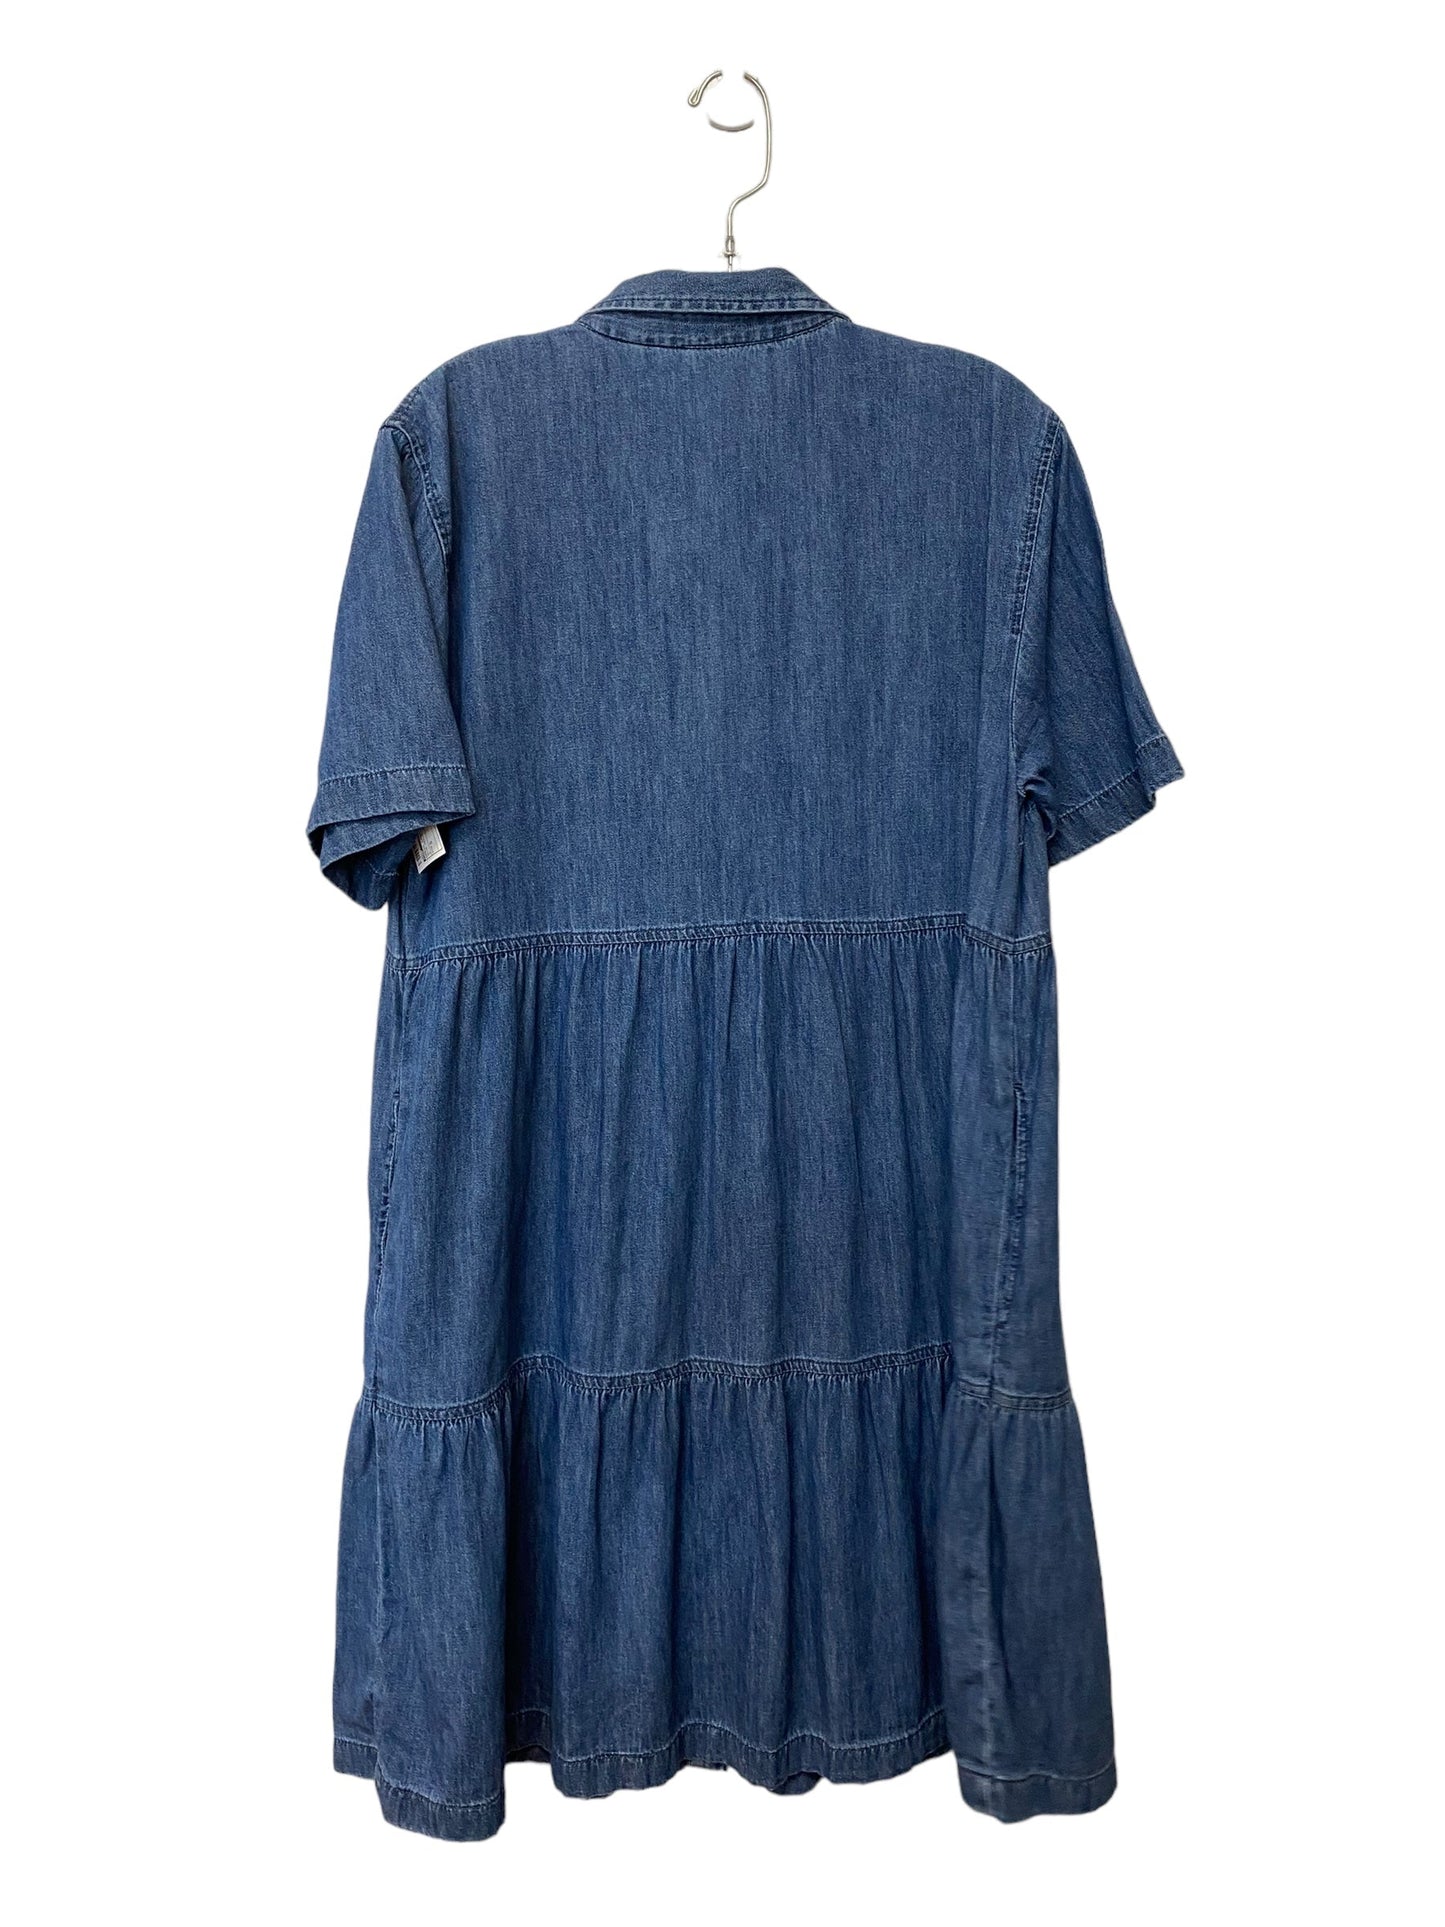 Blue Denim Dress Casual Short Gap, Size S